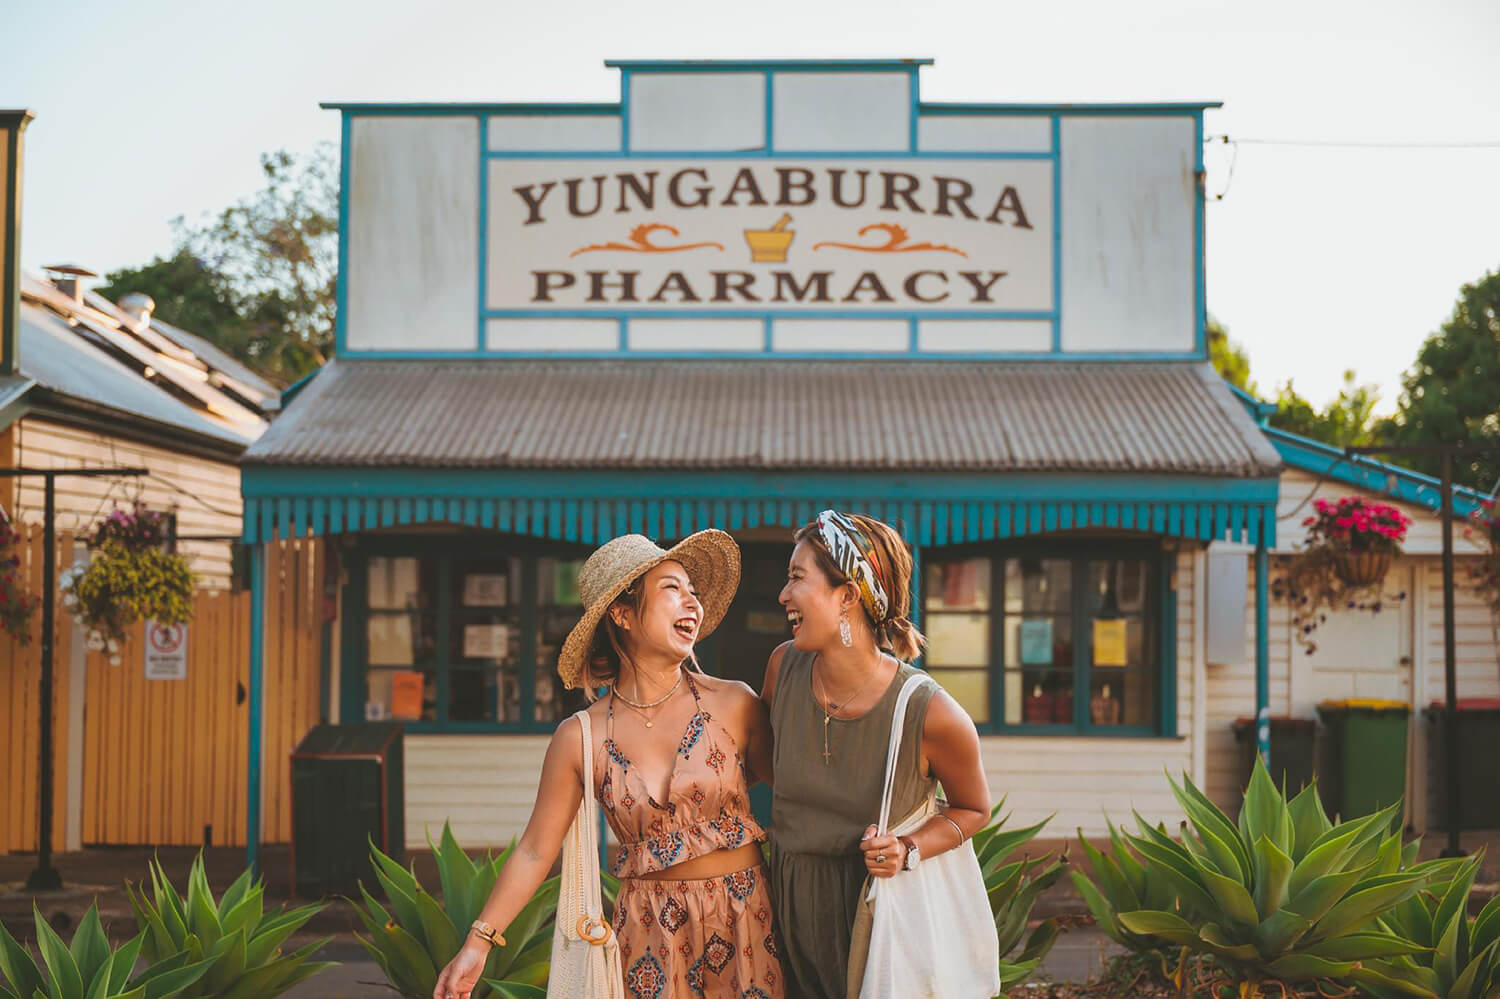 Yungaburra Pharmacy